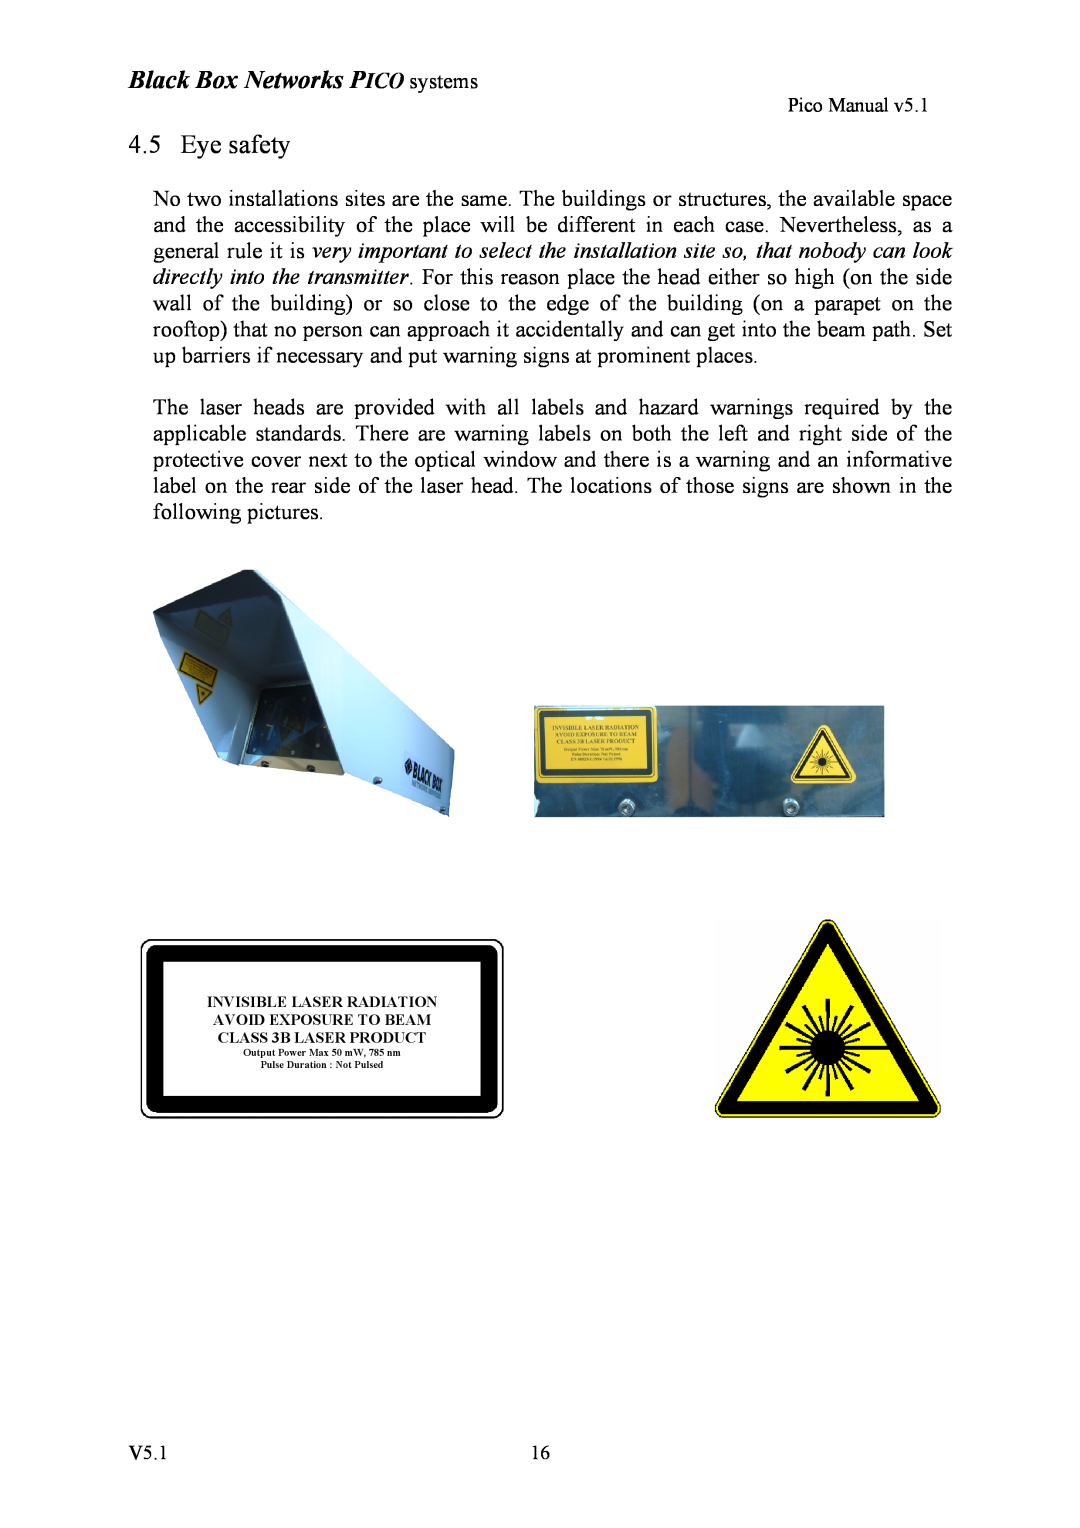 Black Box V5.1 user manual Eye safety, Black Box Networks PICO systems, Pico Manual 